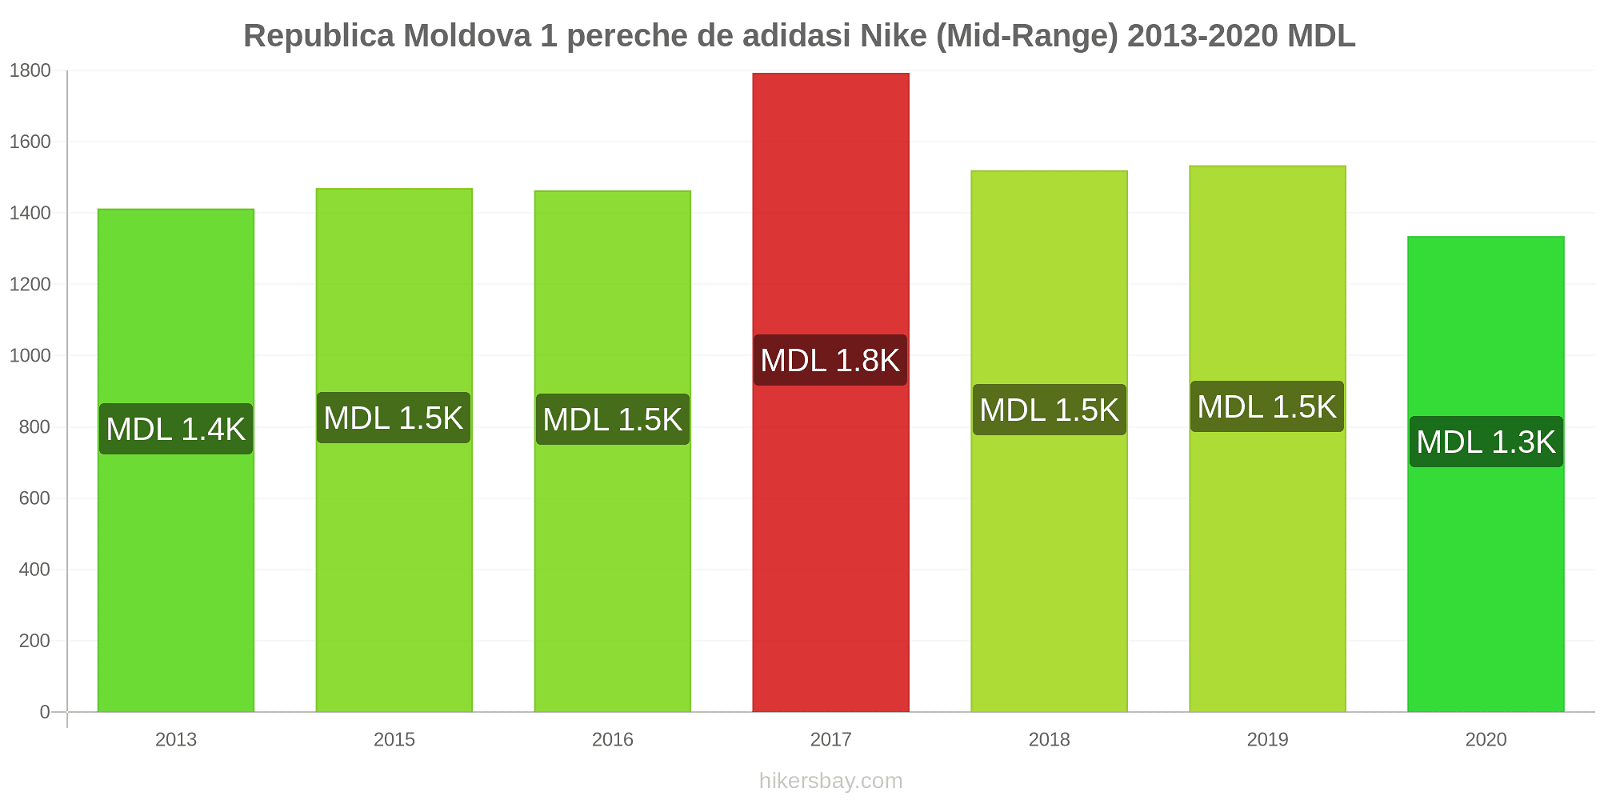 Republica Moldova modificări de preț 1 pereche de adidasi Nike (Mid-Range) hikersbay.com